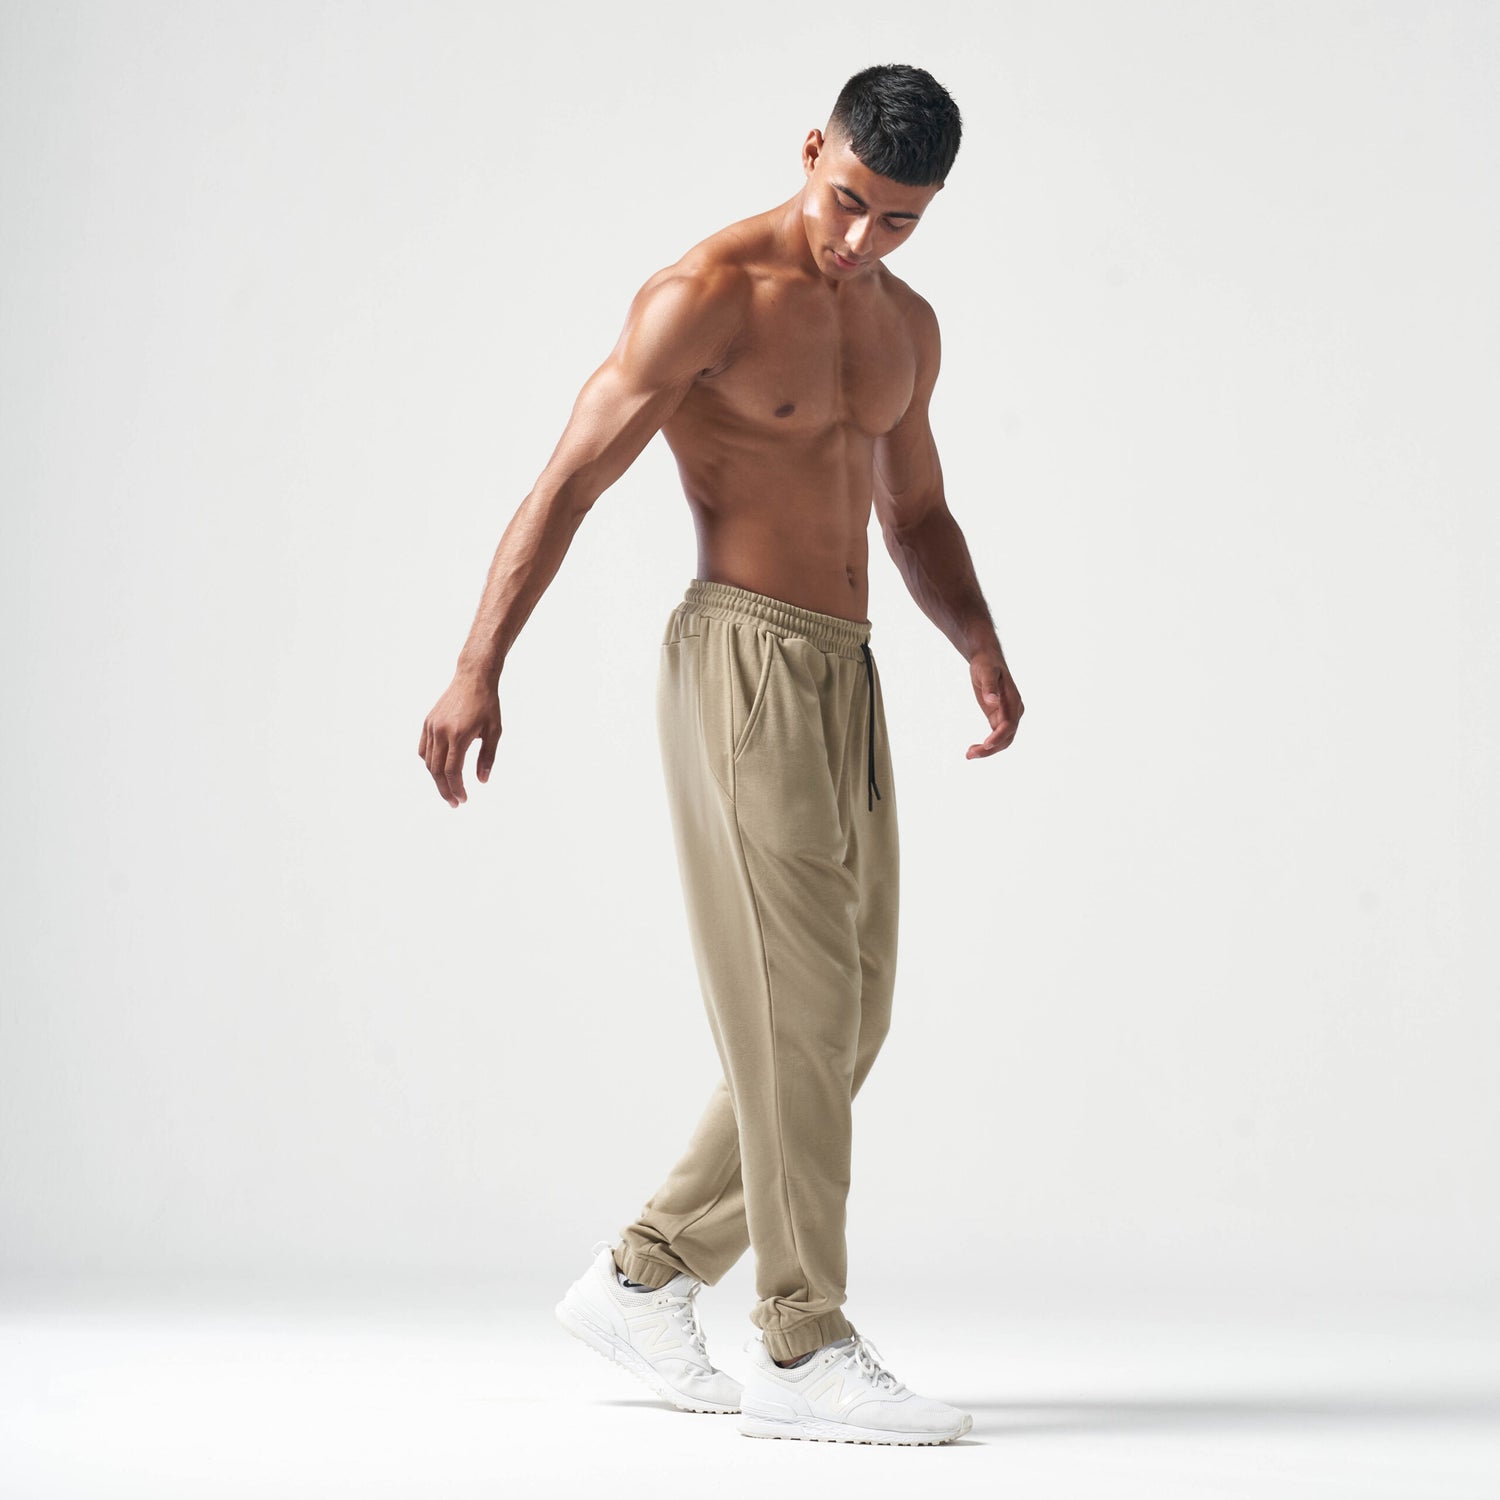 Men's Joggers & Sweatpants, Gym & Fitness Clothing